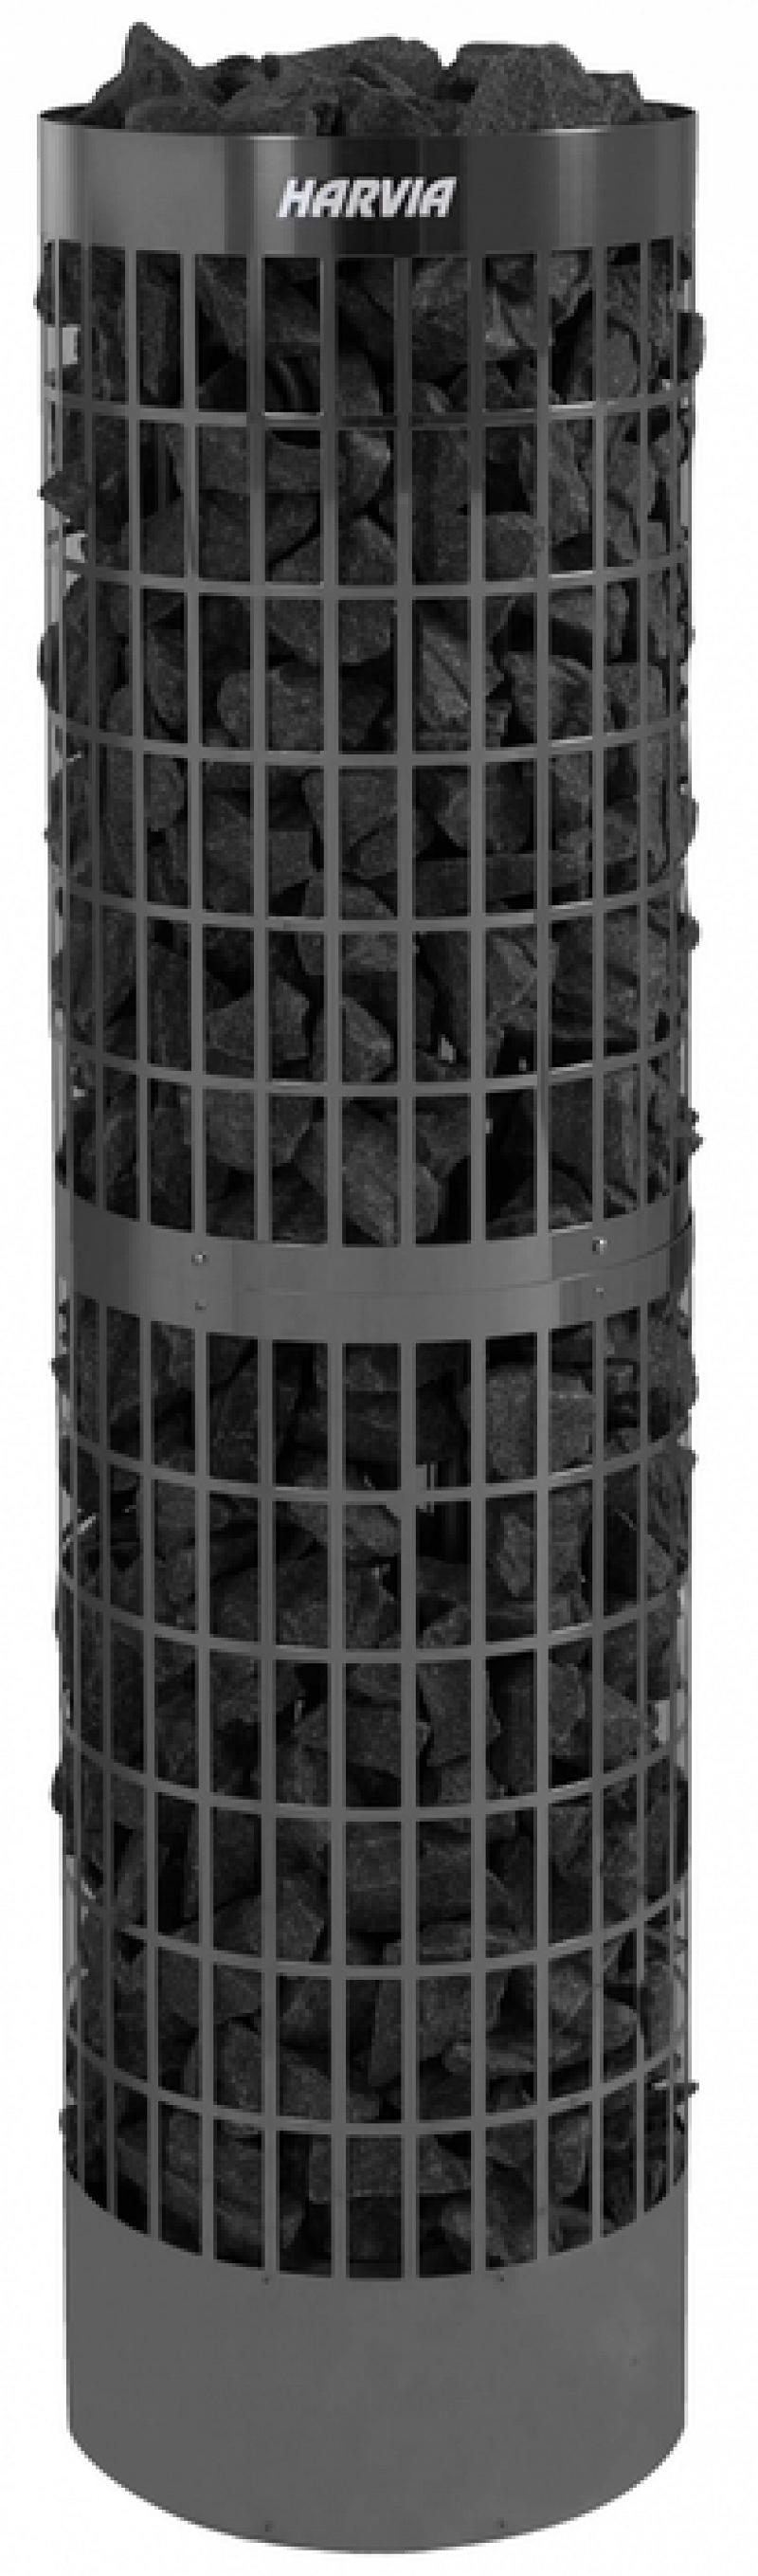 фото Электрическая печь 11 квт harvia cilindro pc100e/135e black steel